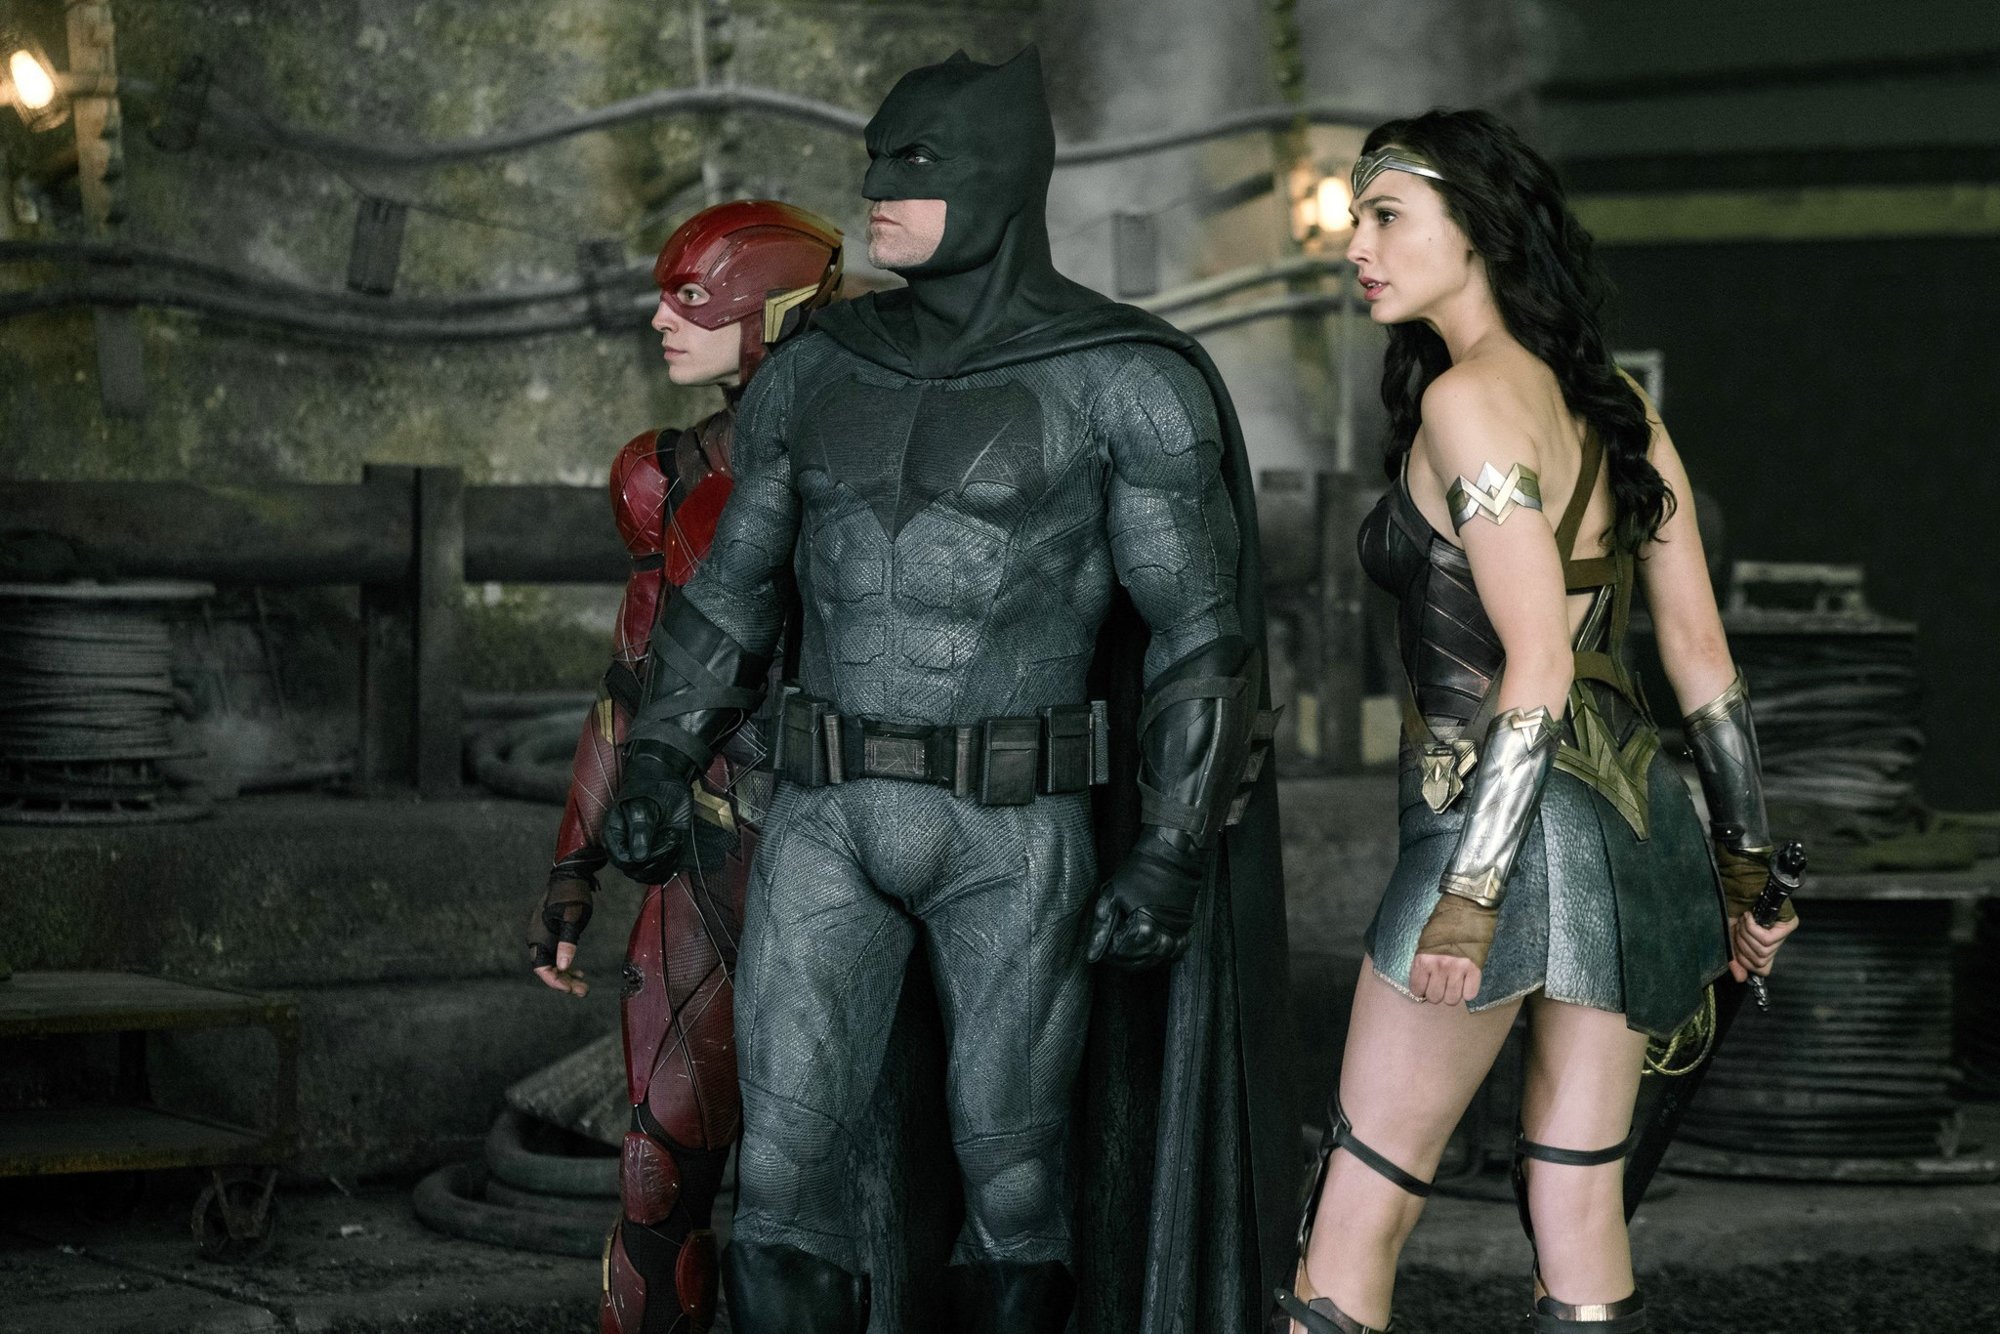 Ezra Miller, Ben Affleck and Gal Gadot in Warner Bros. Pictures' Justice League (2017)